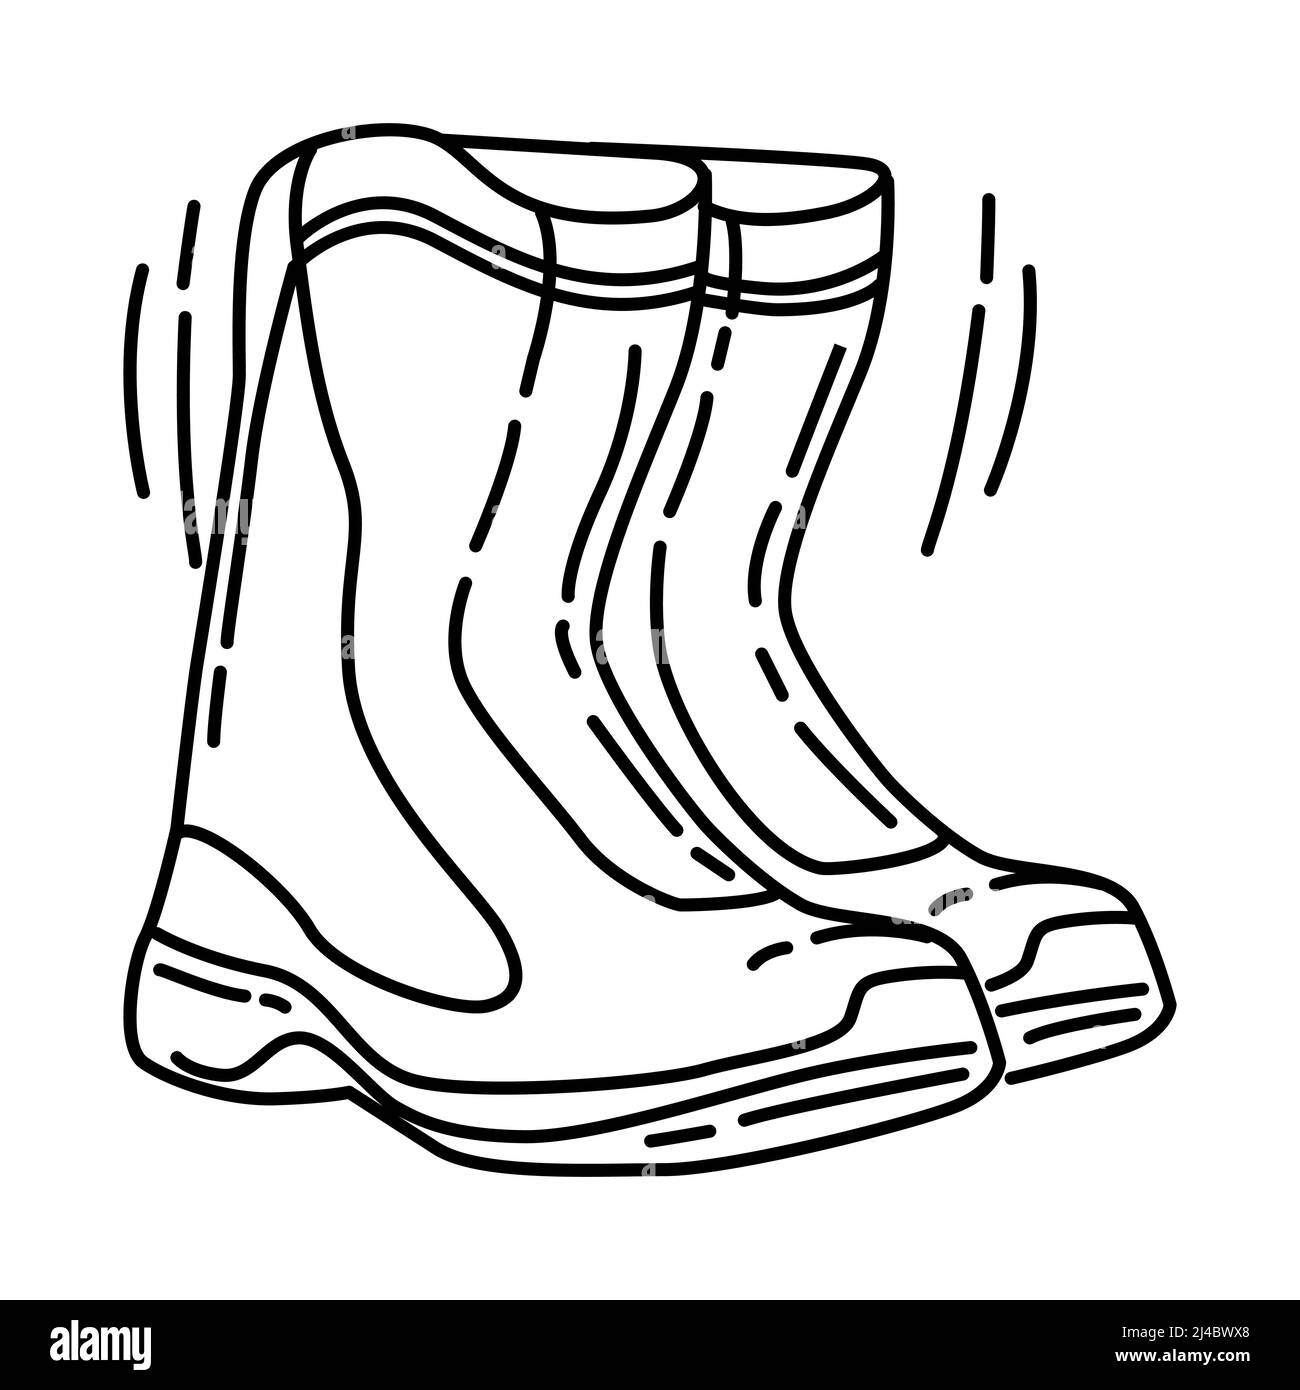 Biker boots Stock Vector Images - Alamy